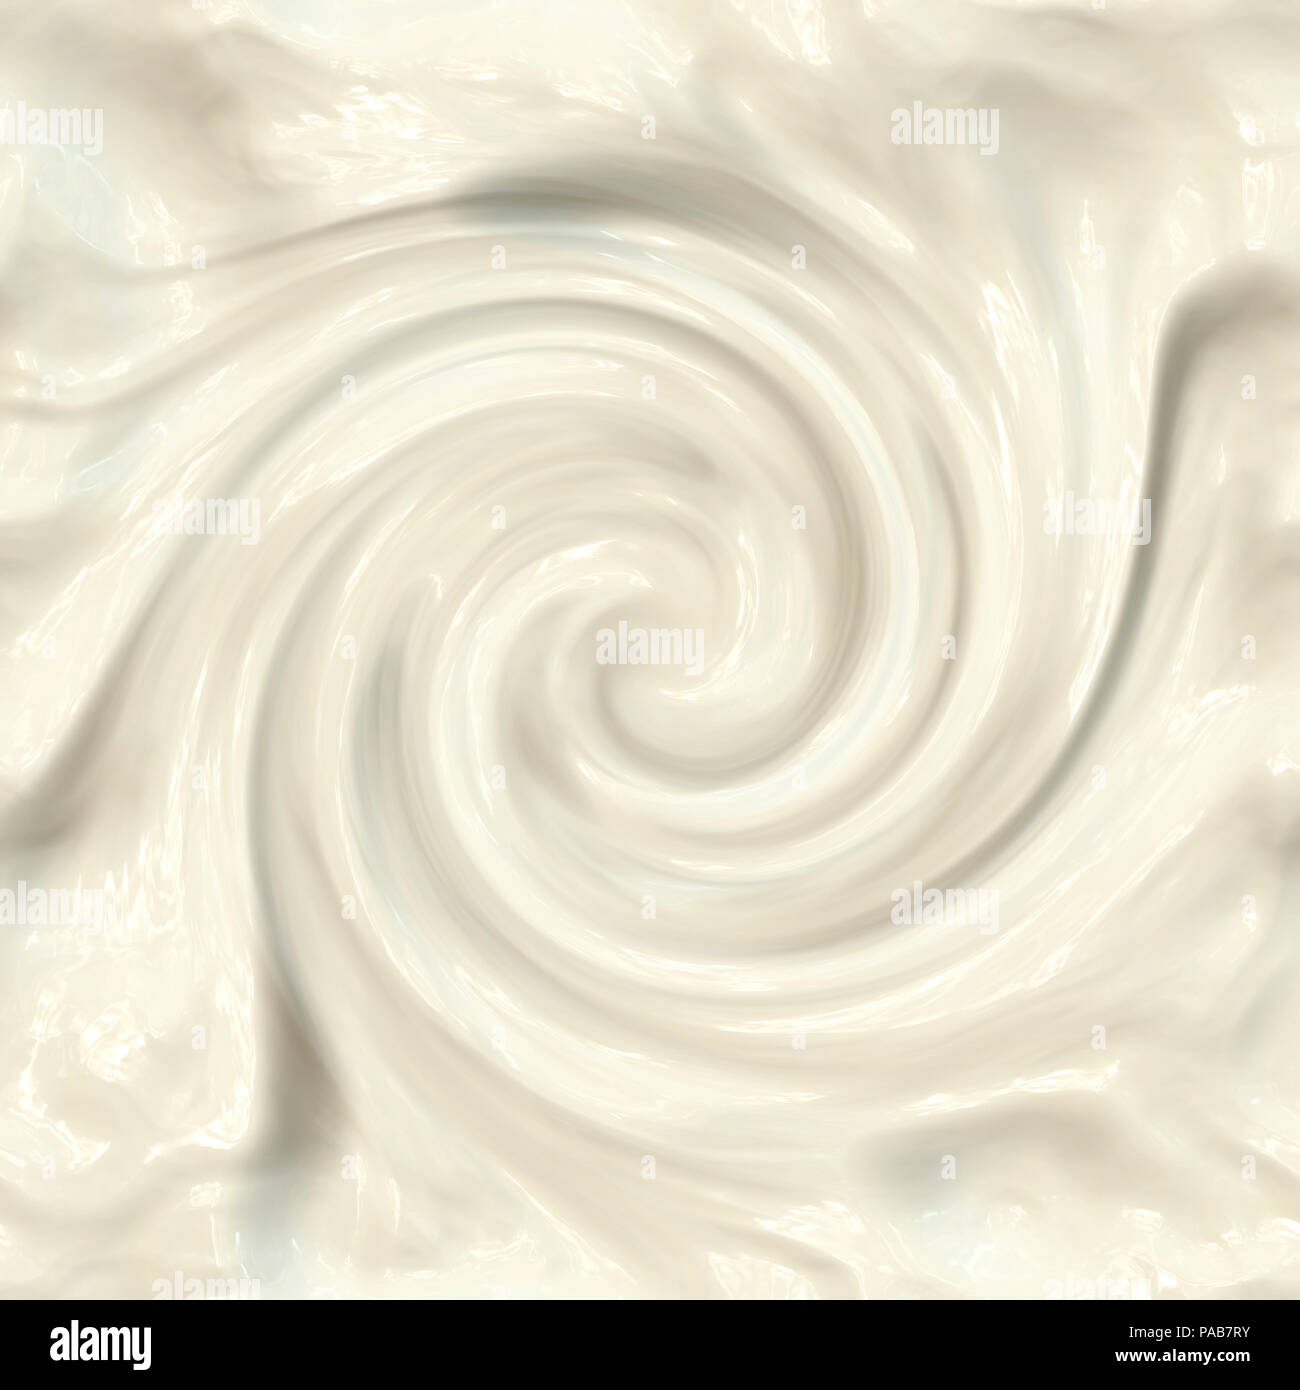 An illustration of a nice cream swirl Stock Photo